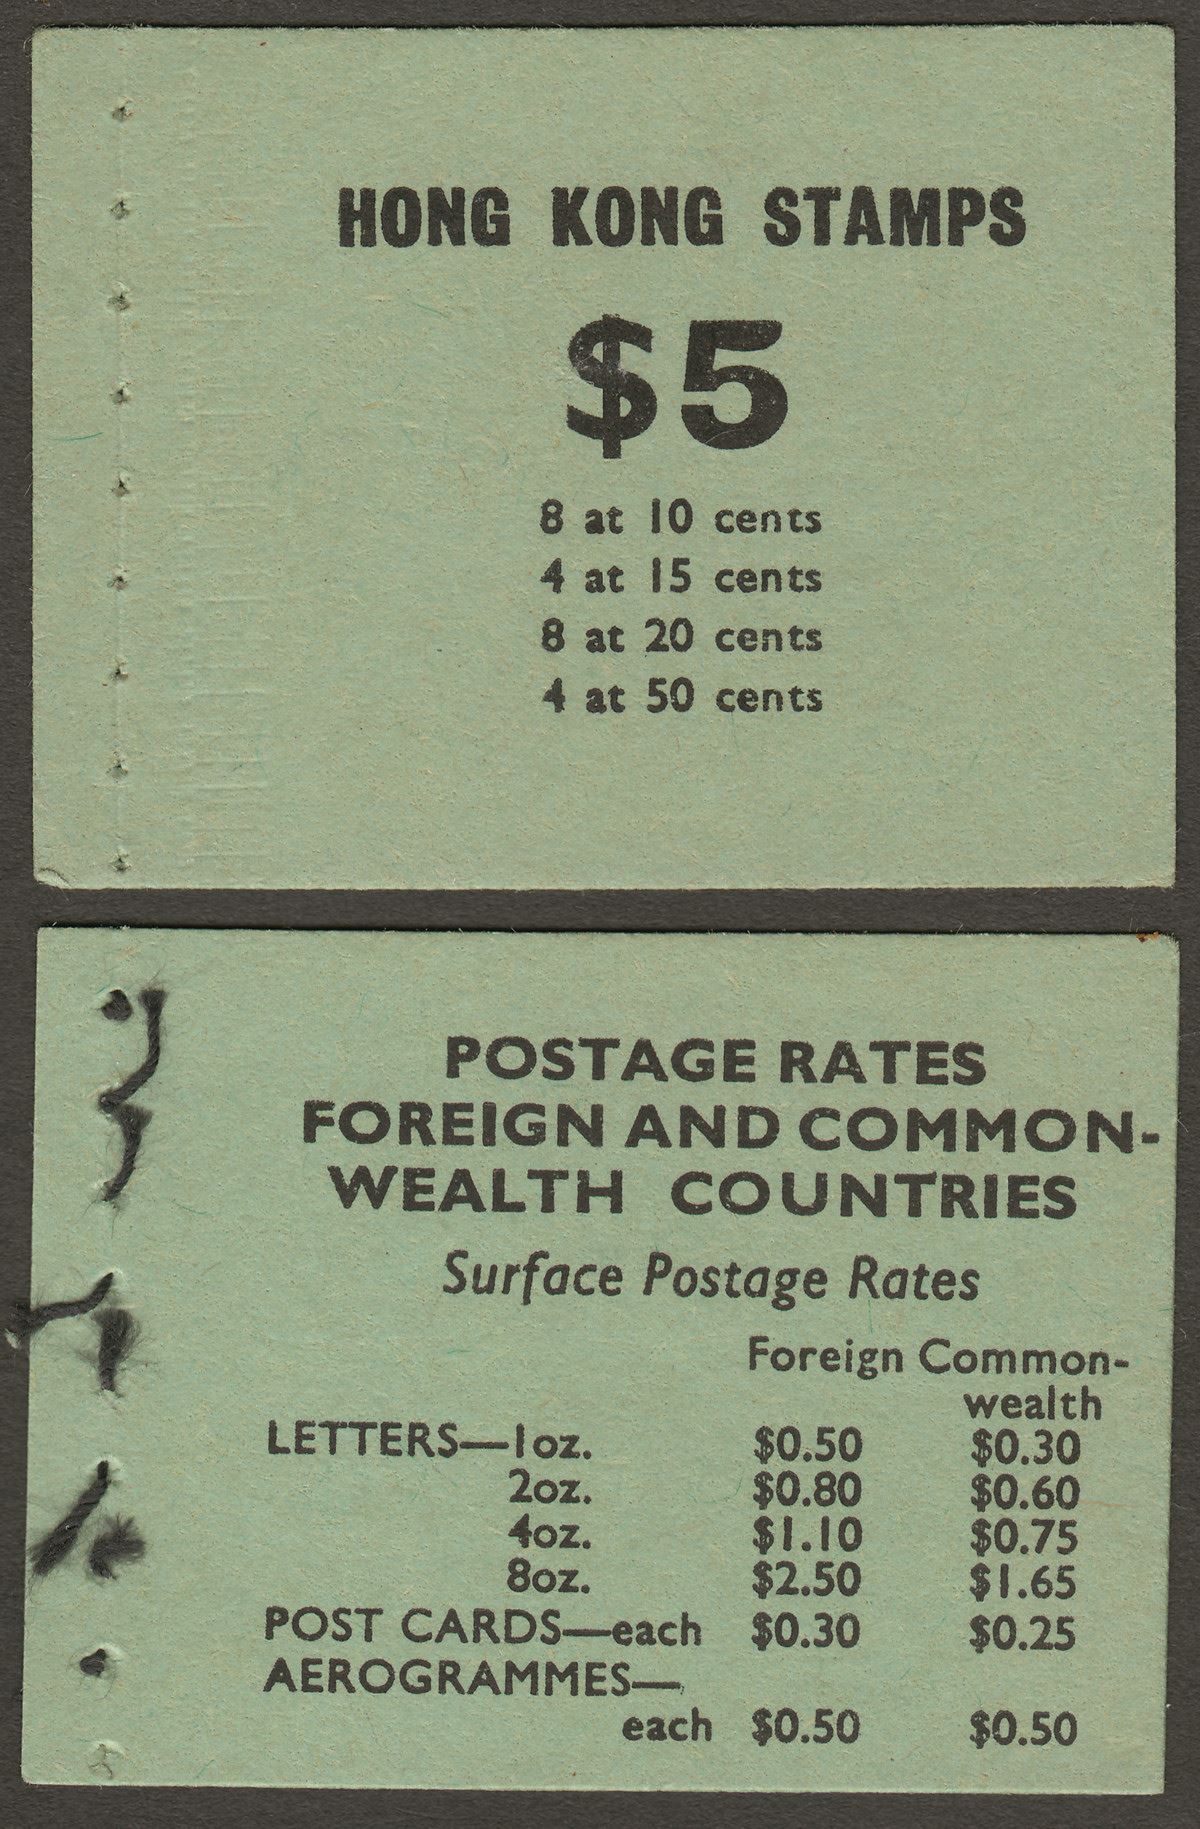 Hong Kong 1973 QEII $5 Booklet Cover - no contents like SG SB11